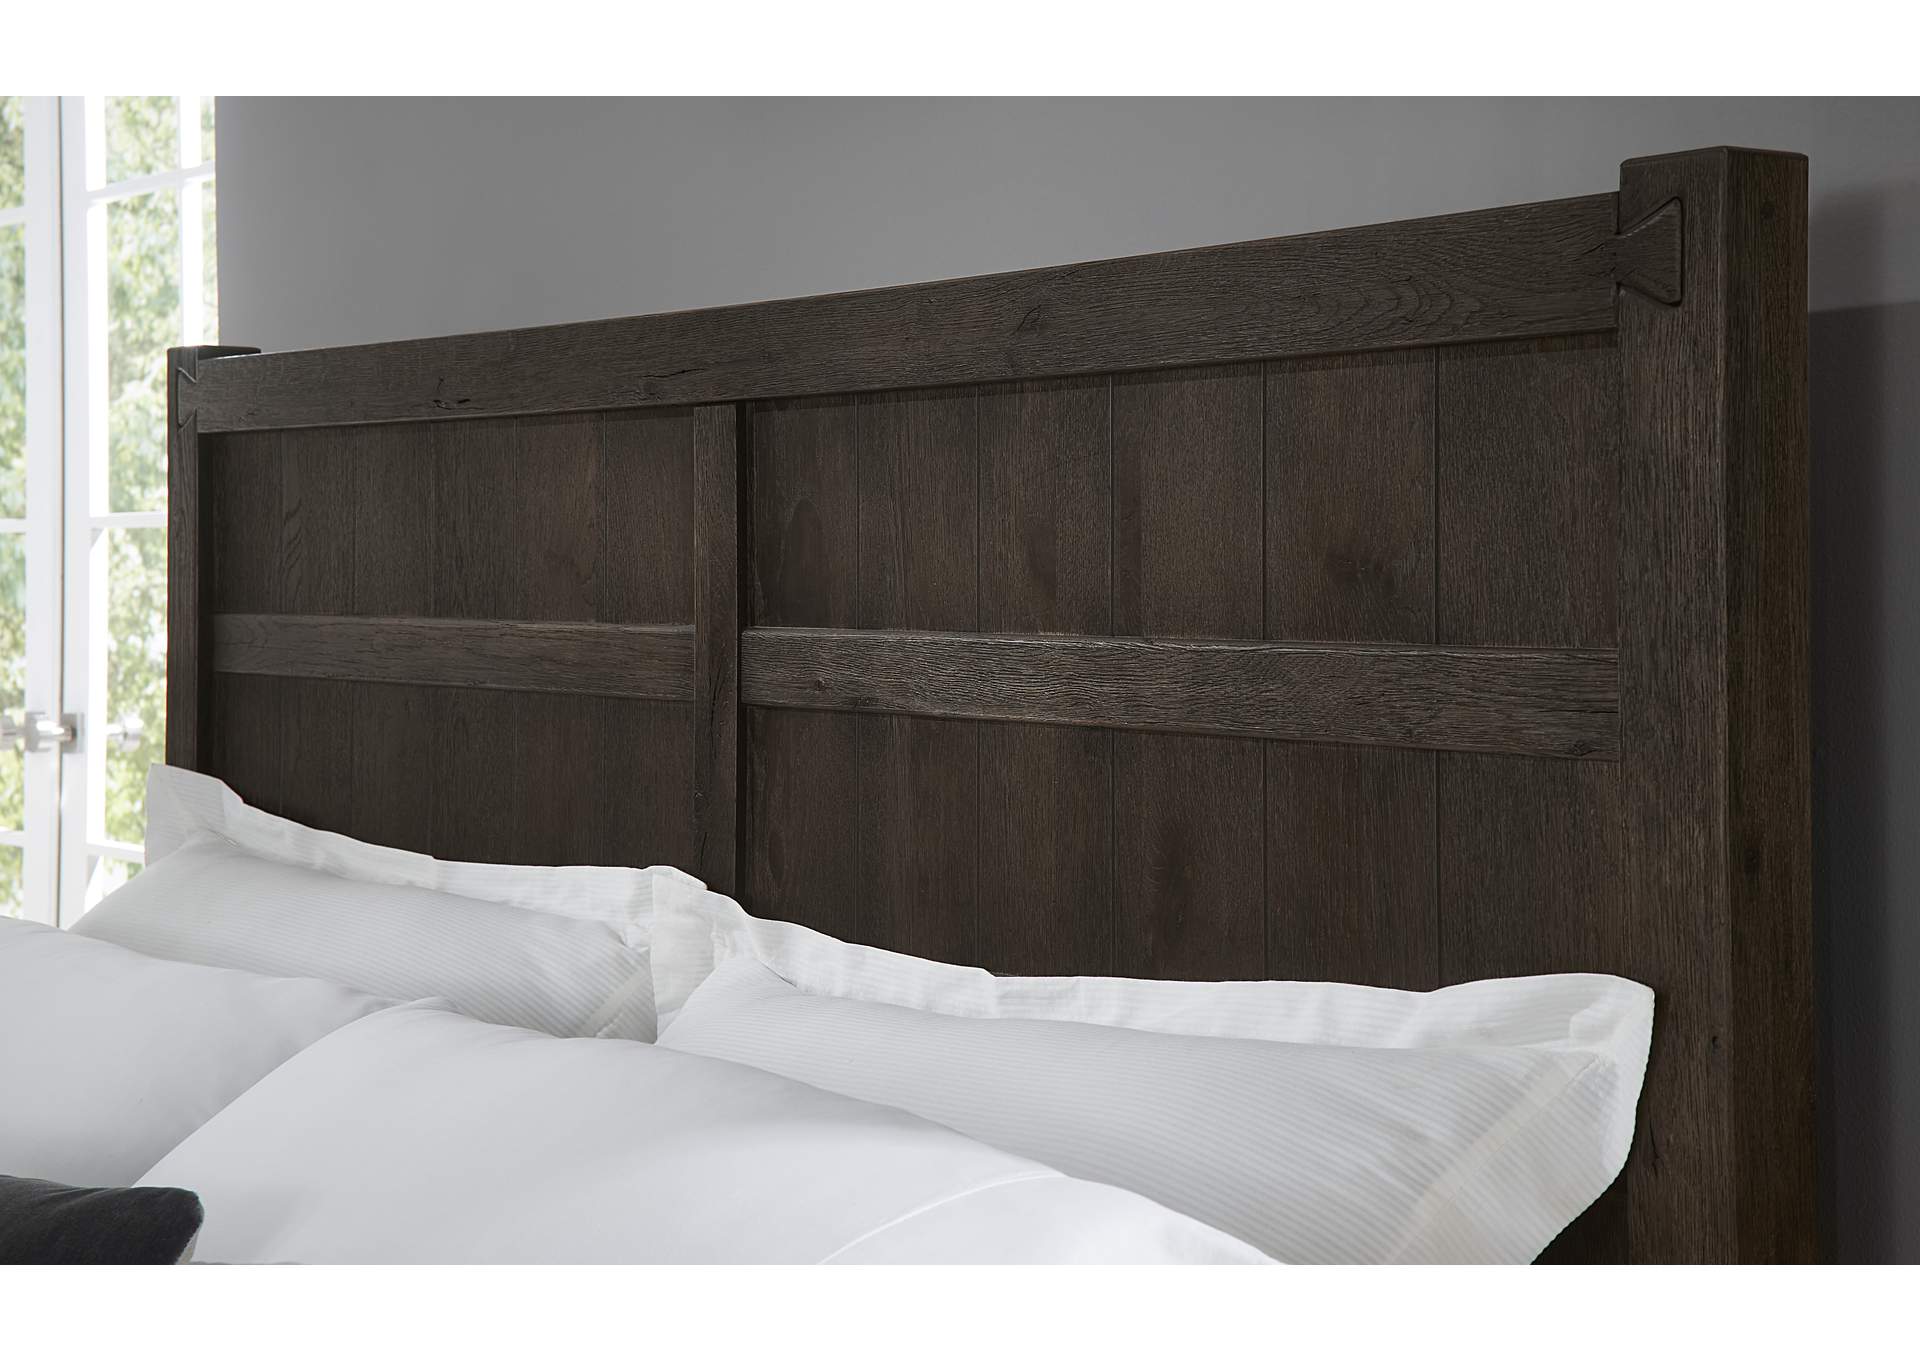 750 - Dovetail-Java Cal King Board & Batten Bed,Vaughan-Bassett